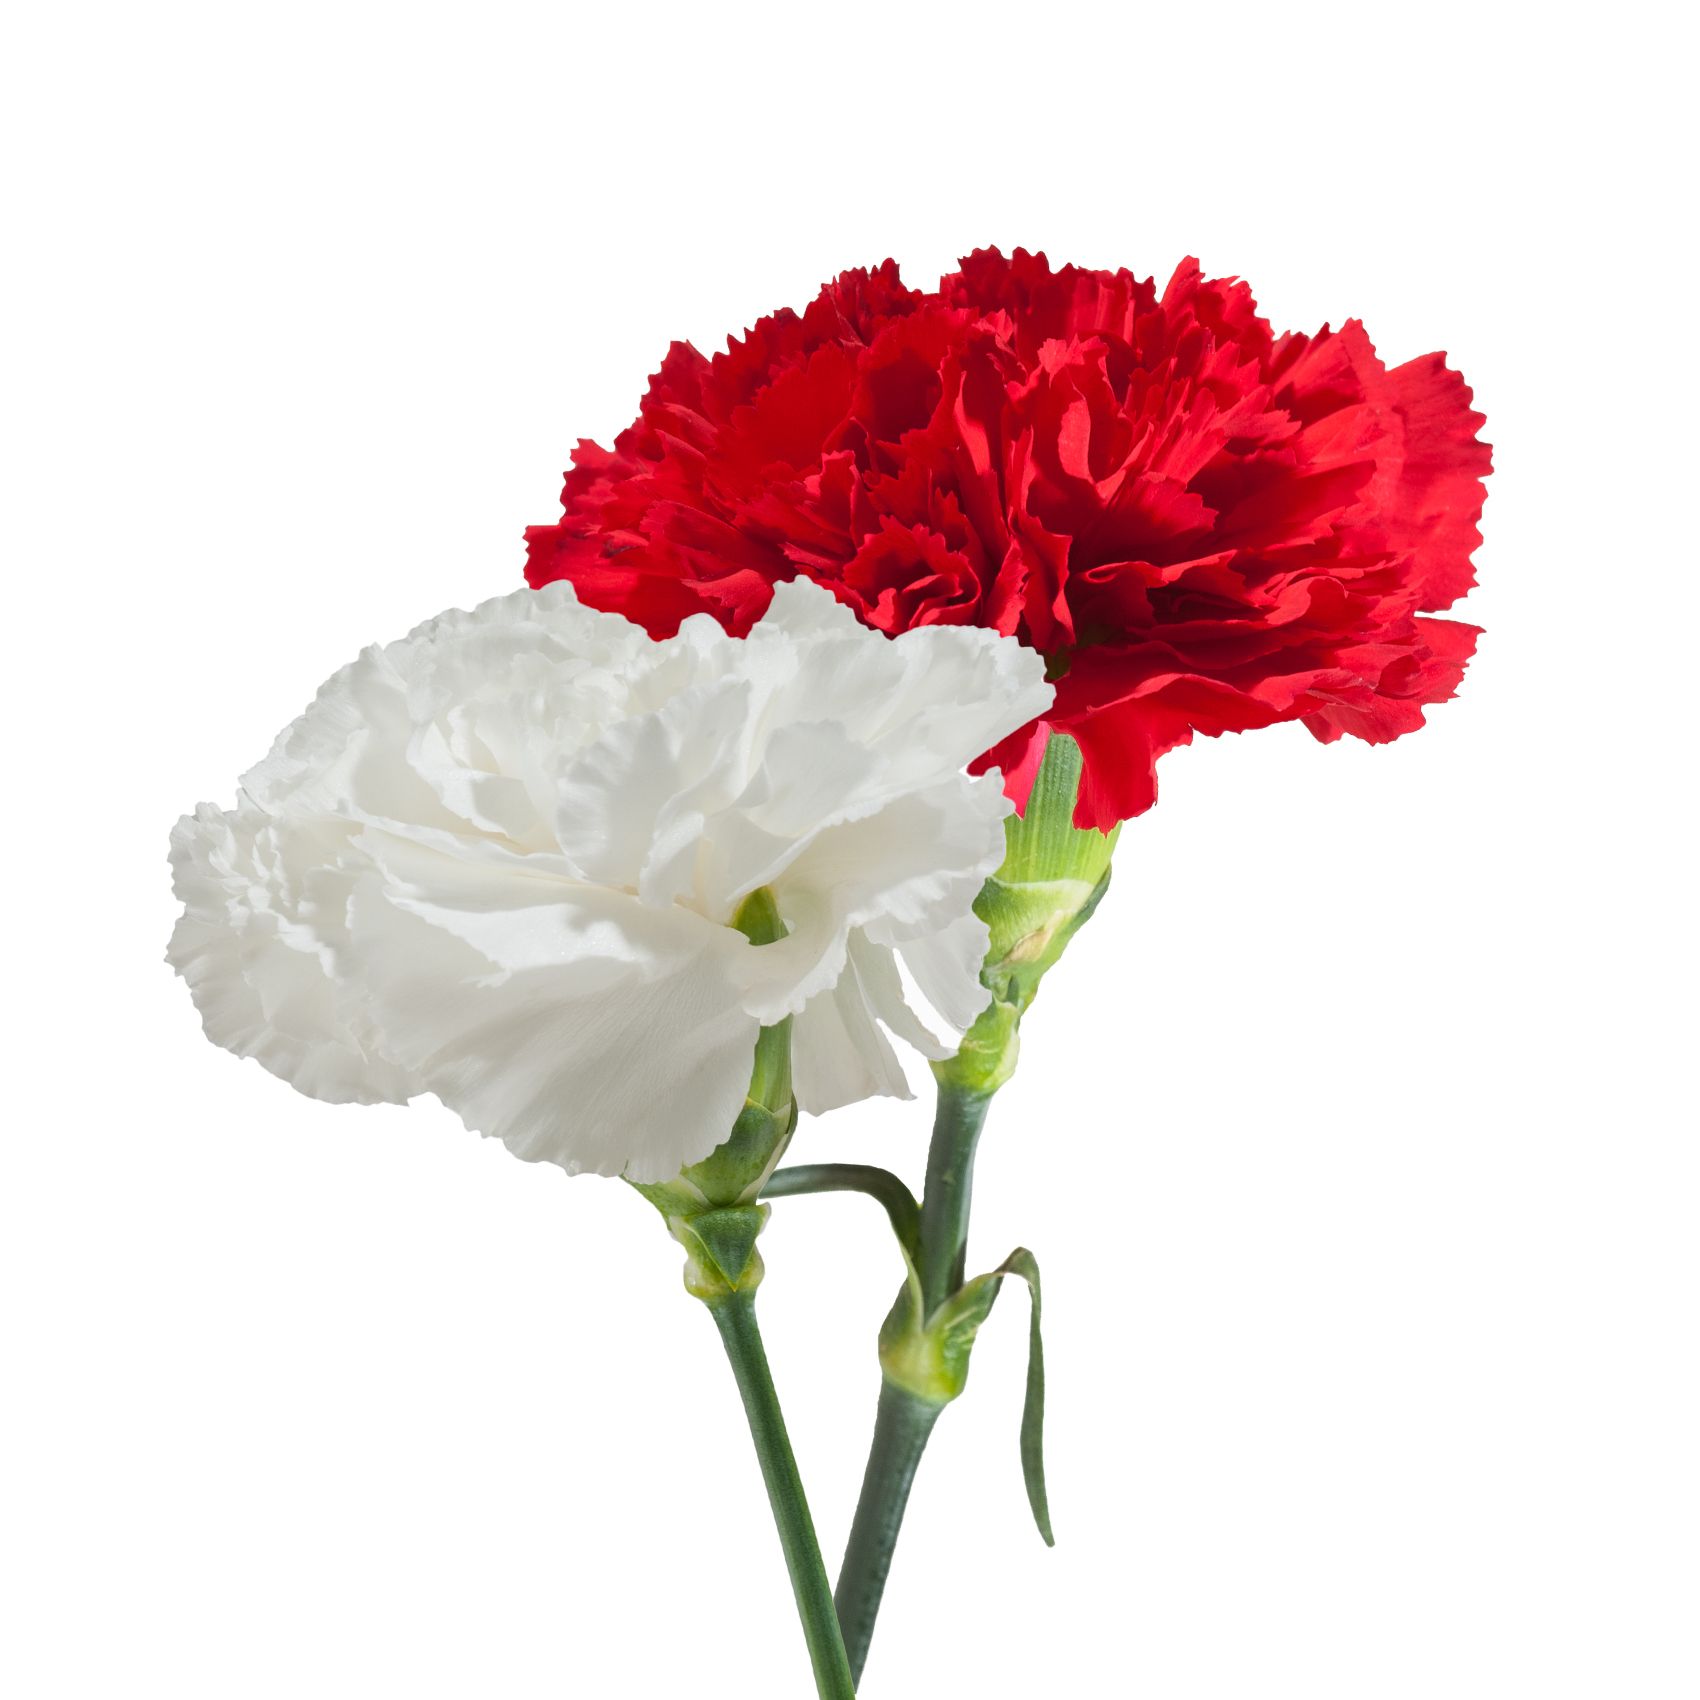 Carnation Wedding Assortment, 100/100 Stems - White, Red